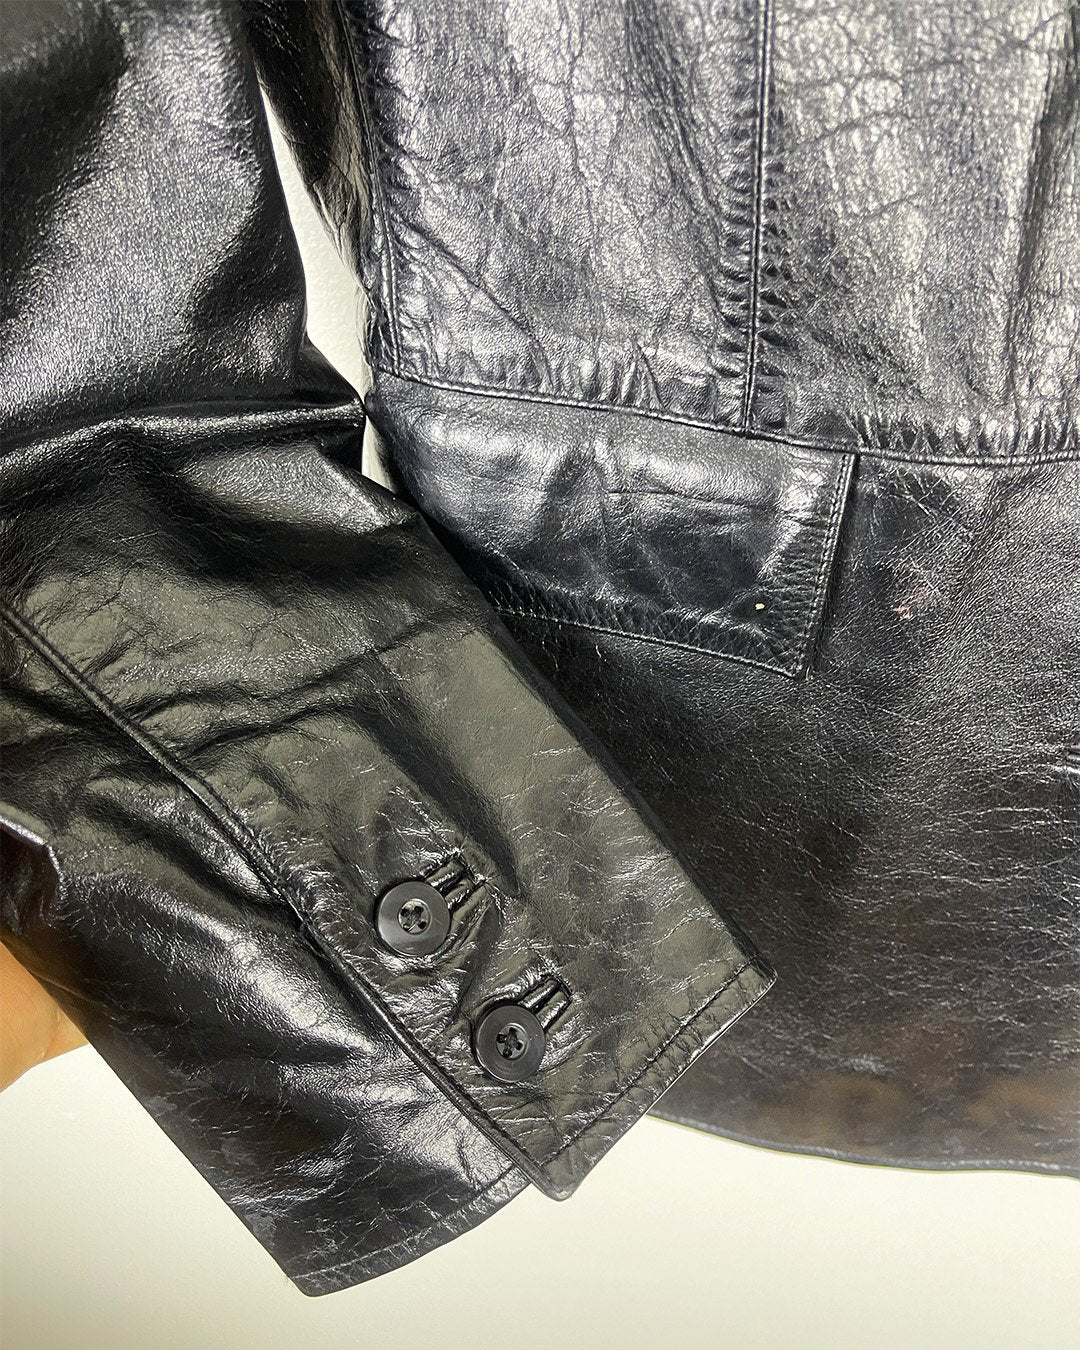 M - Black Faux Leather Jacket